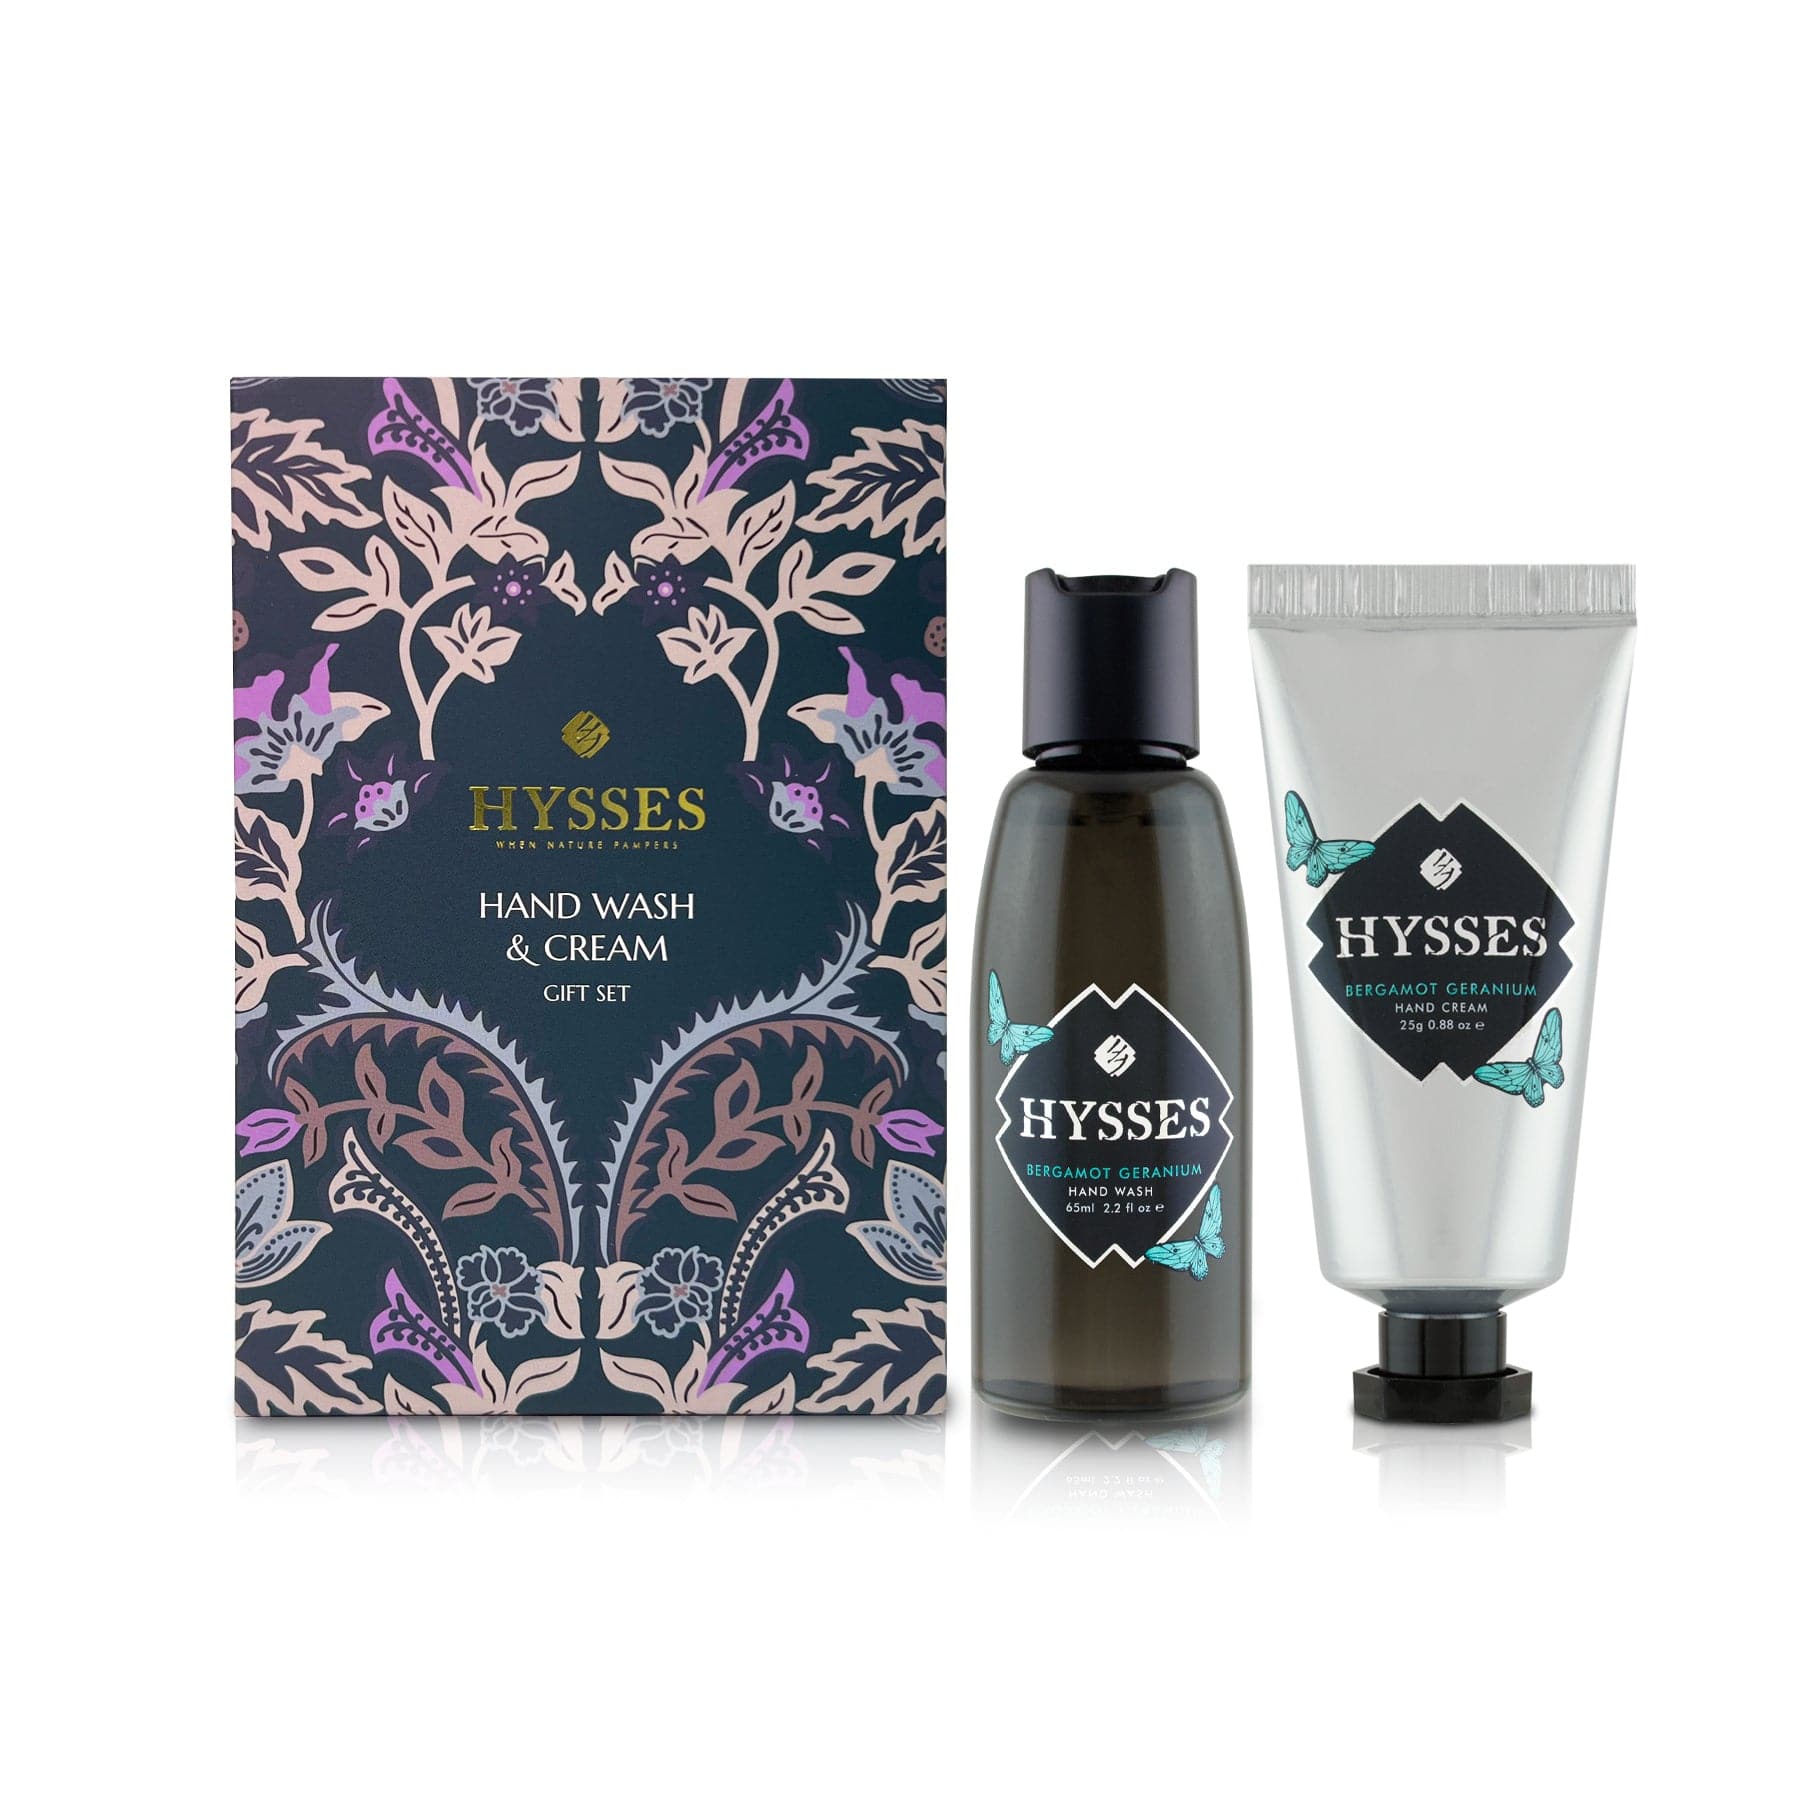 Hysses Body Care Palmarosa Jasmine Travel Gift Set (Hand Wash & Hand Cream) Palmarosa Jasmine